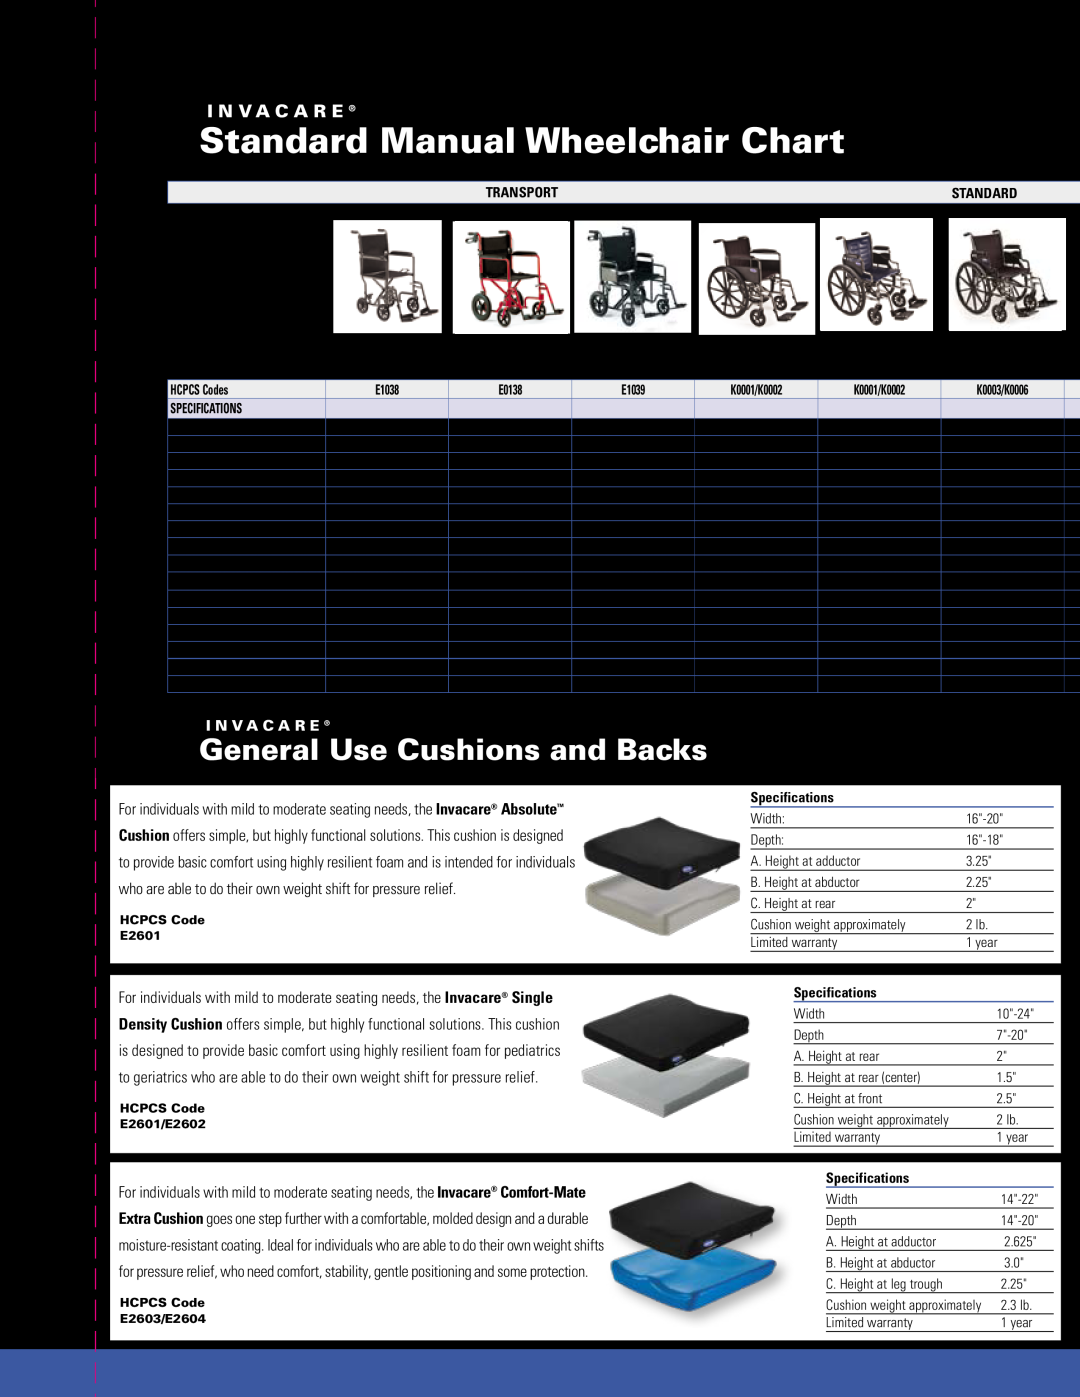 Invacare 9000 XT, 9000 SL, SX5, EX2 manual Standard Manual Wheelchair Chart, General Use Cushions and Backs, I N V A C A R E 